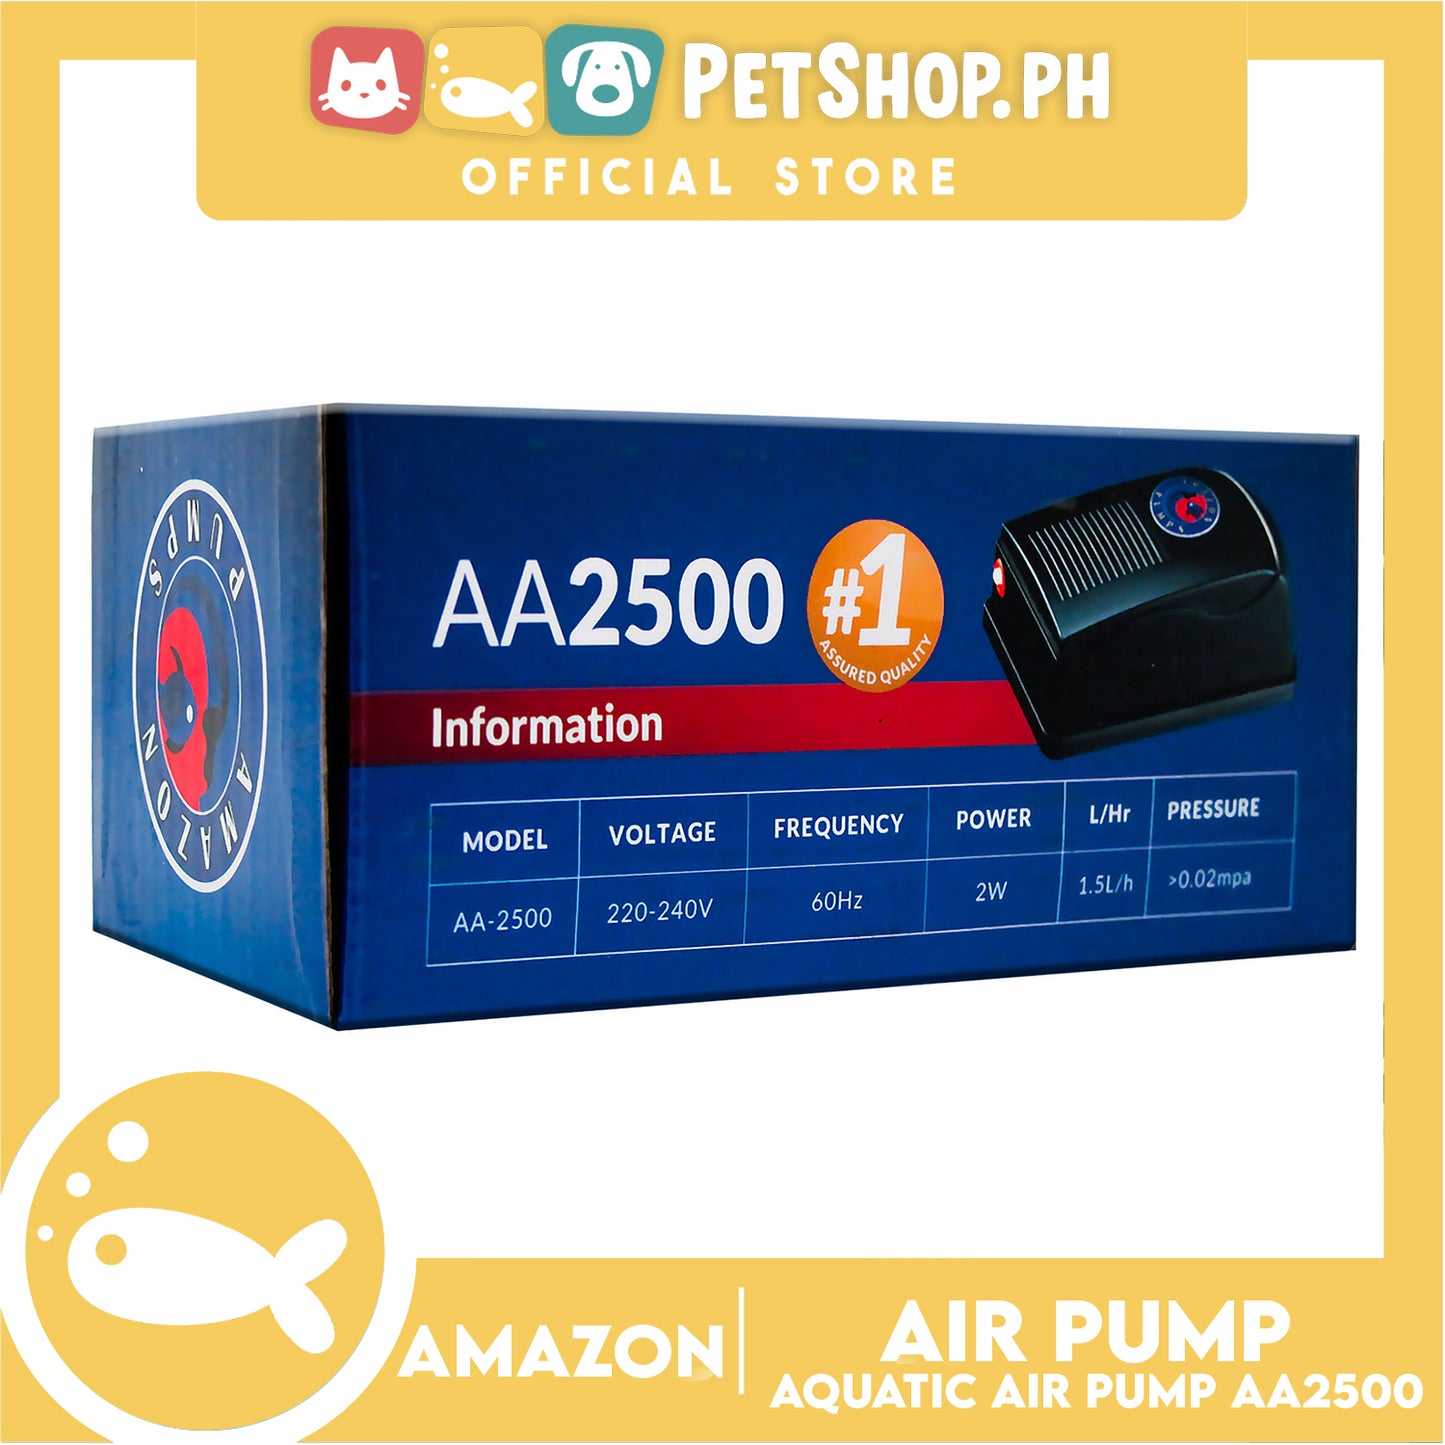 Amazon Single Air Pump AA2500